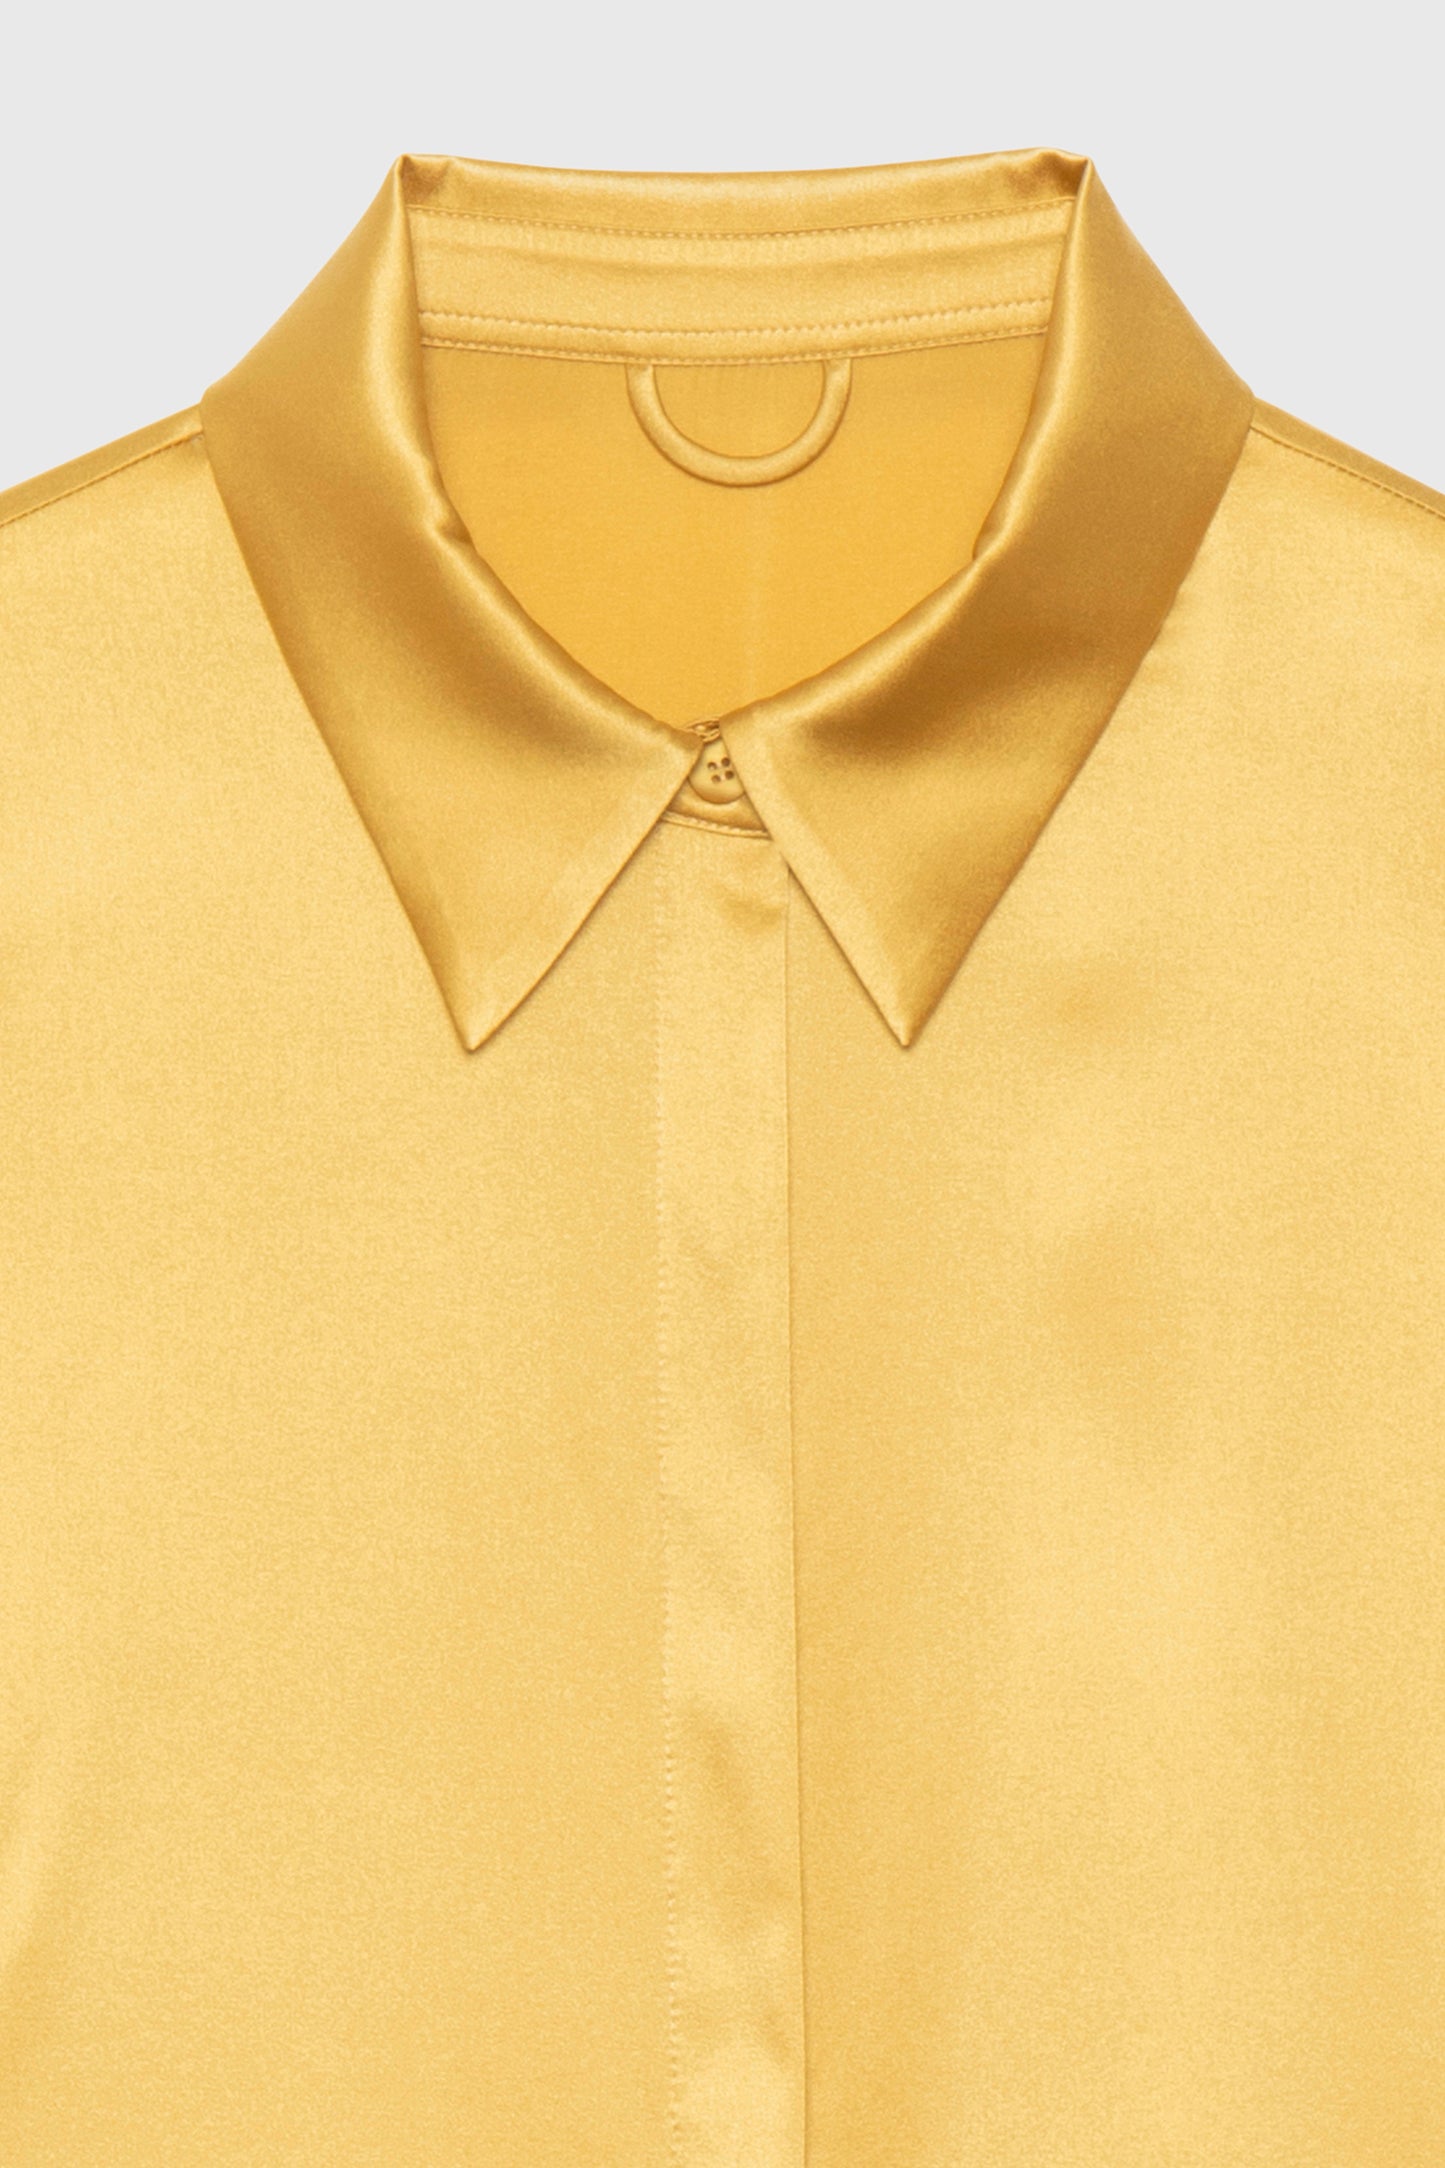 LEVY saffron silk shirt